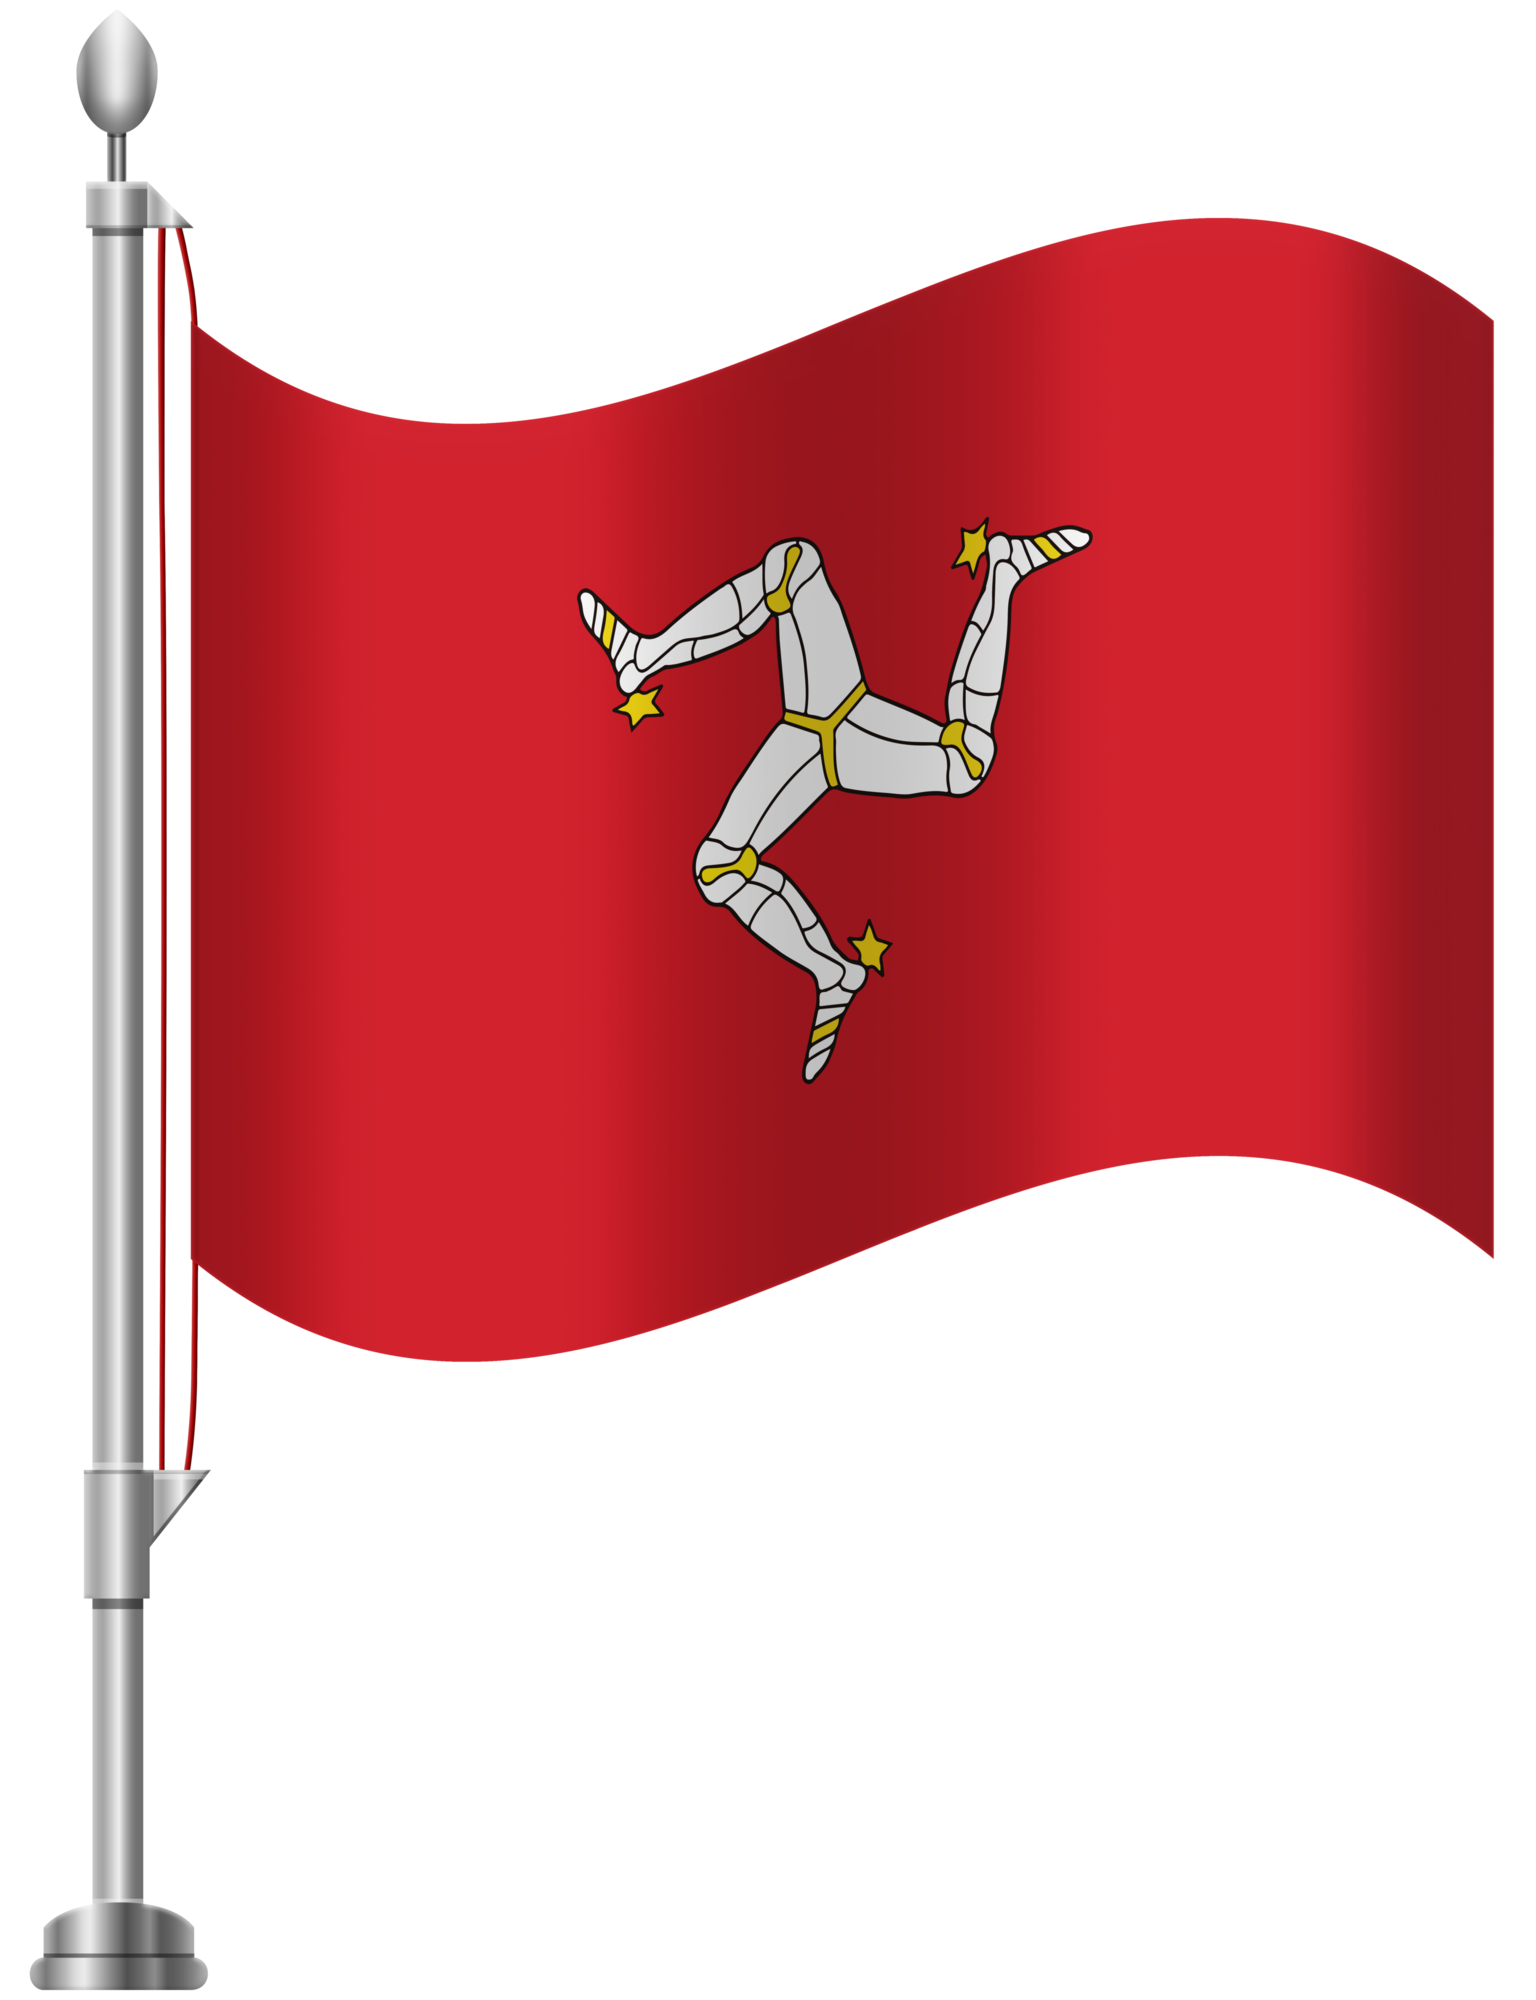 Isle of Man Flag PNG HD Quality